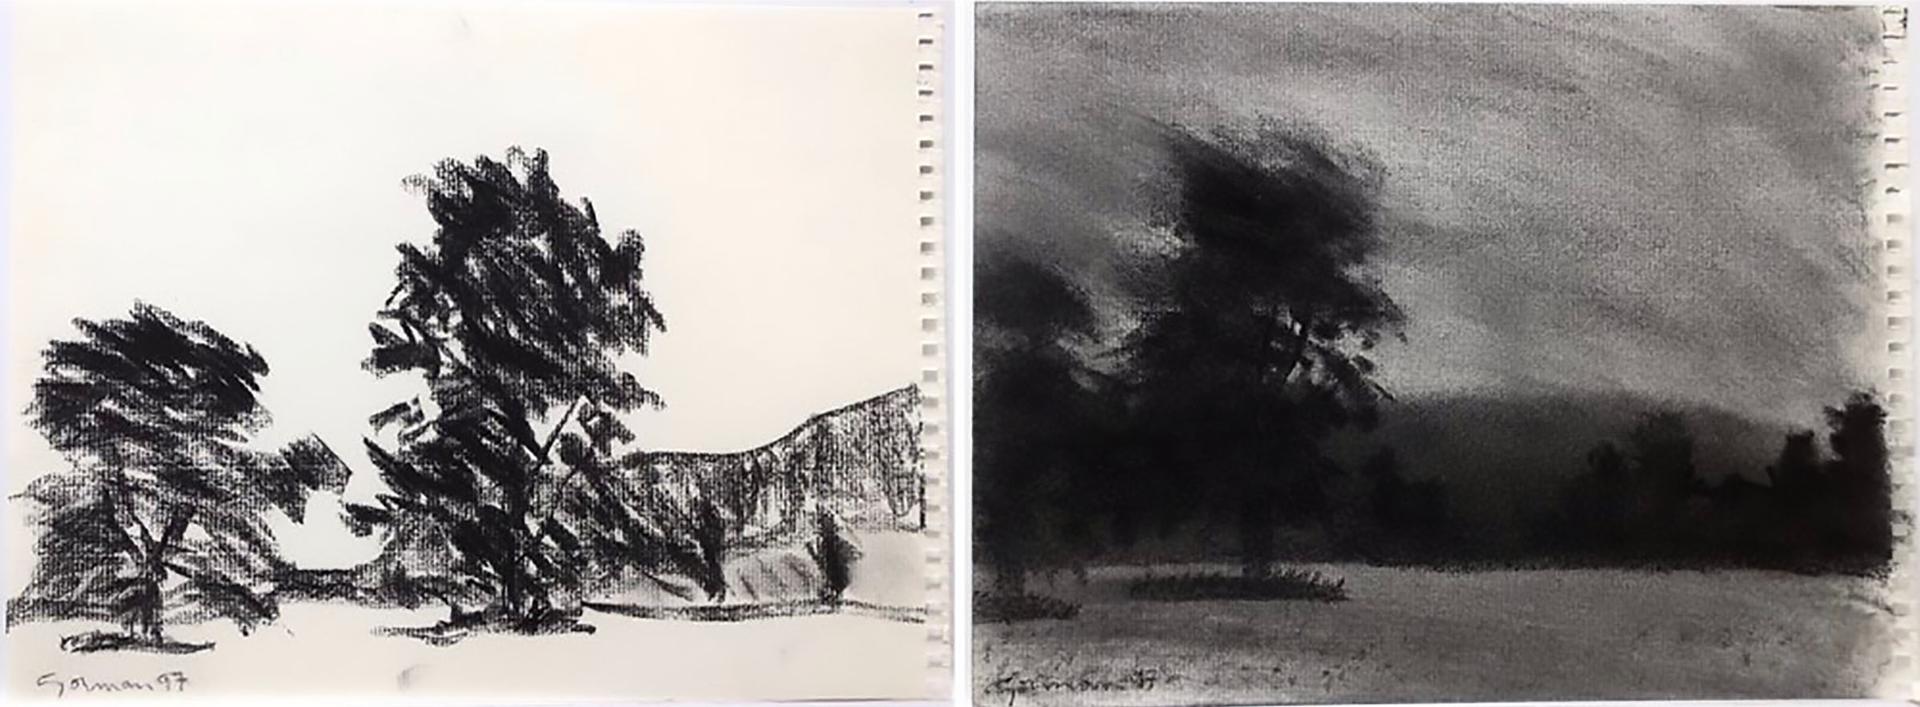 Richard Borthwick Gorman (1935-2010) - Untitled (Trees - Day & Night)